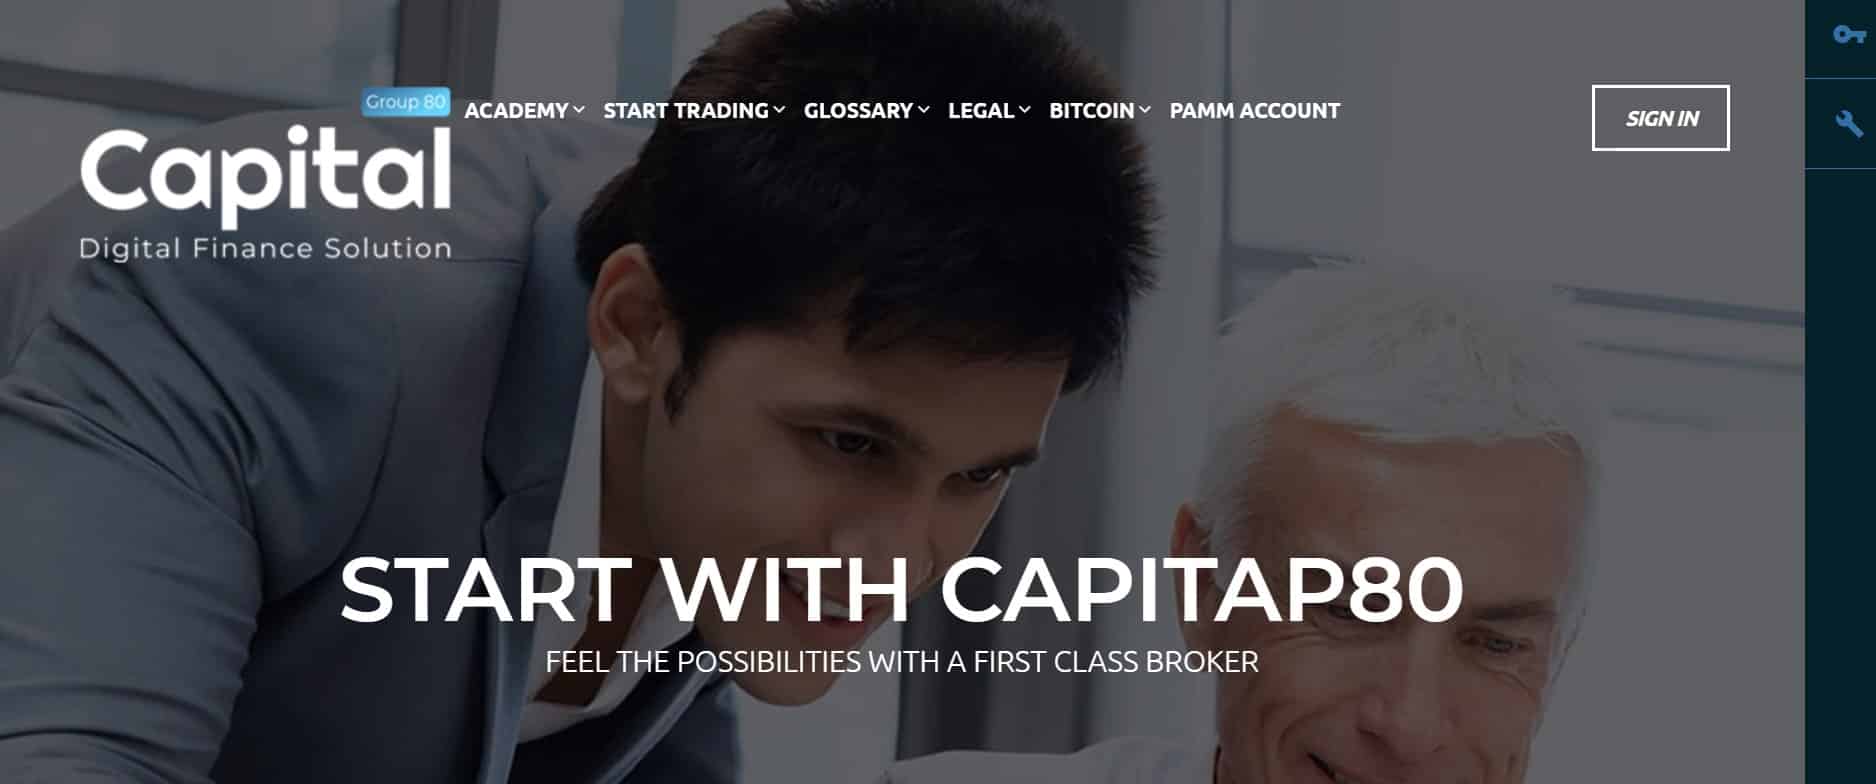 Capital Group80 website